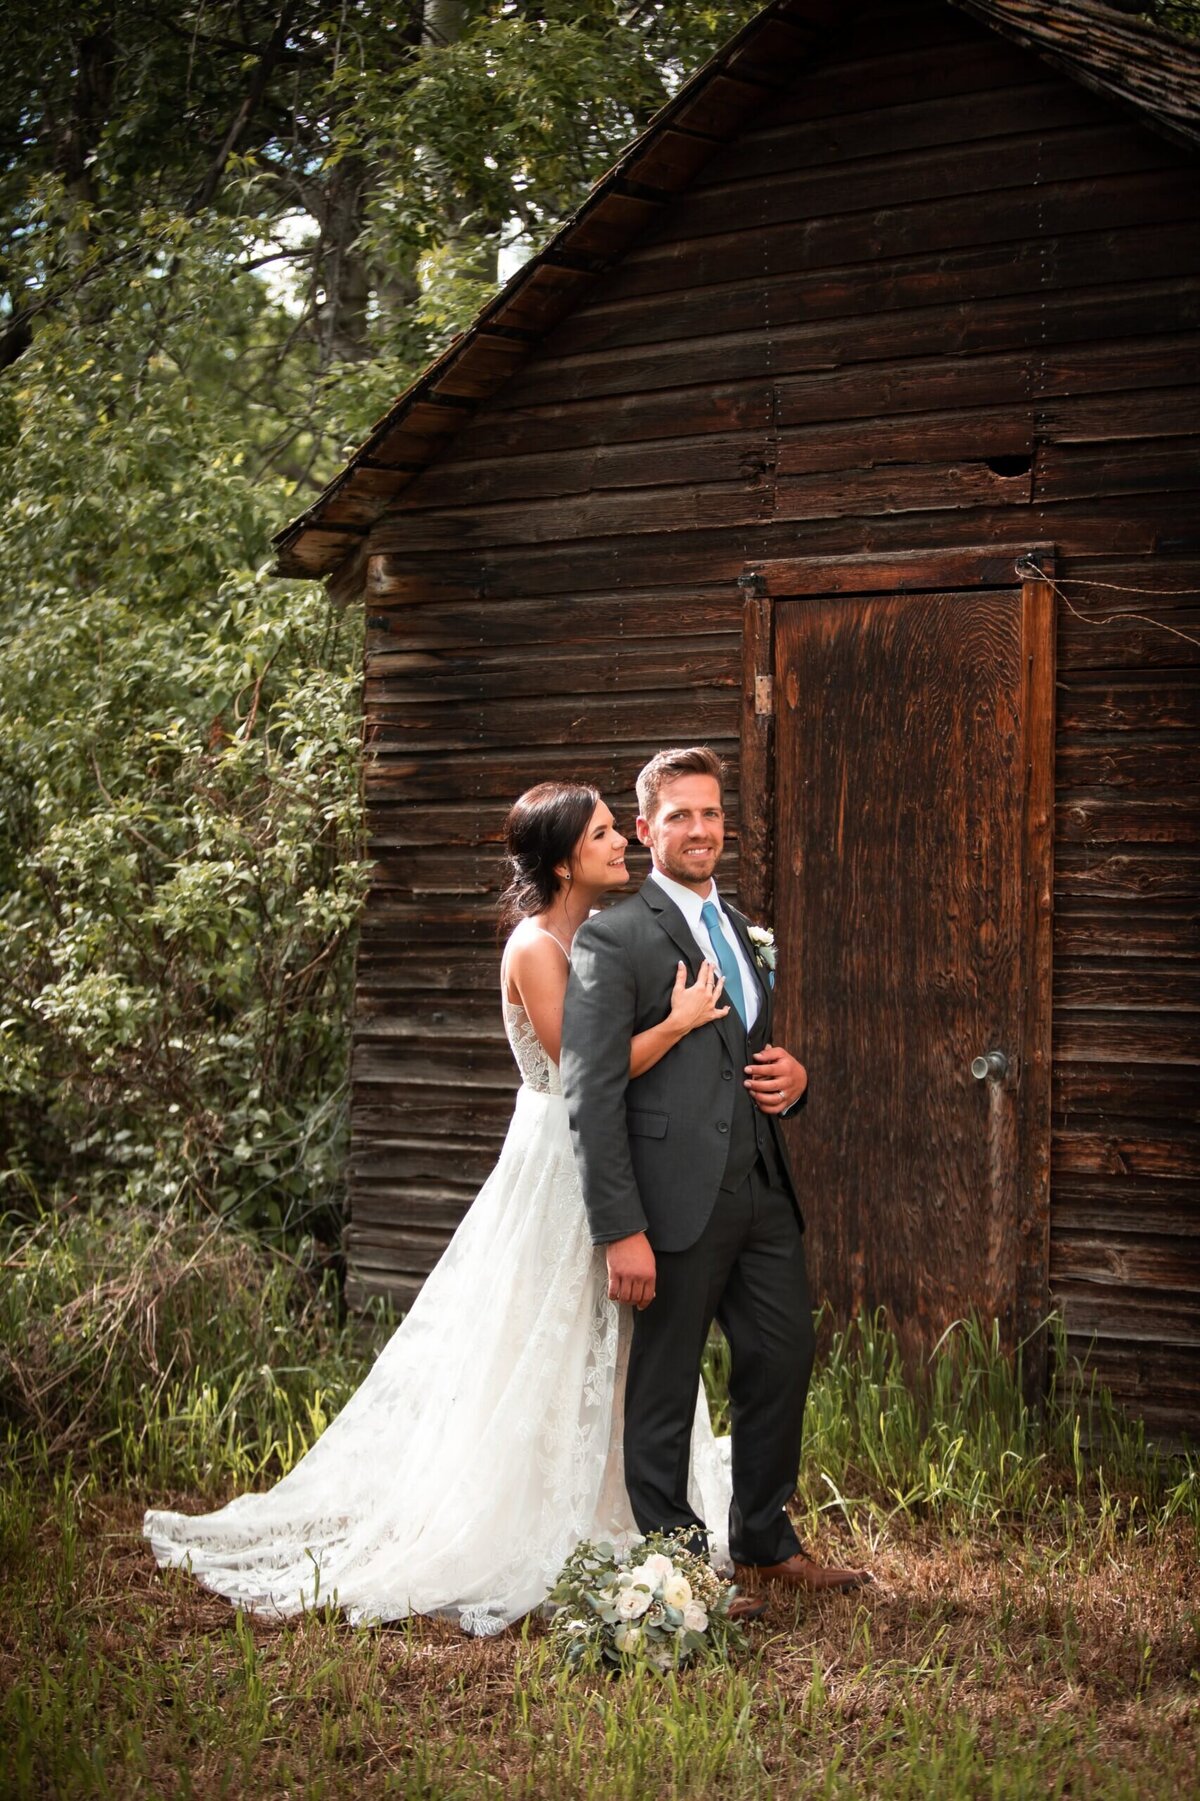 Whitehorse, YukonBest Wedding Photography